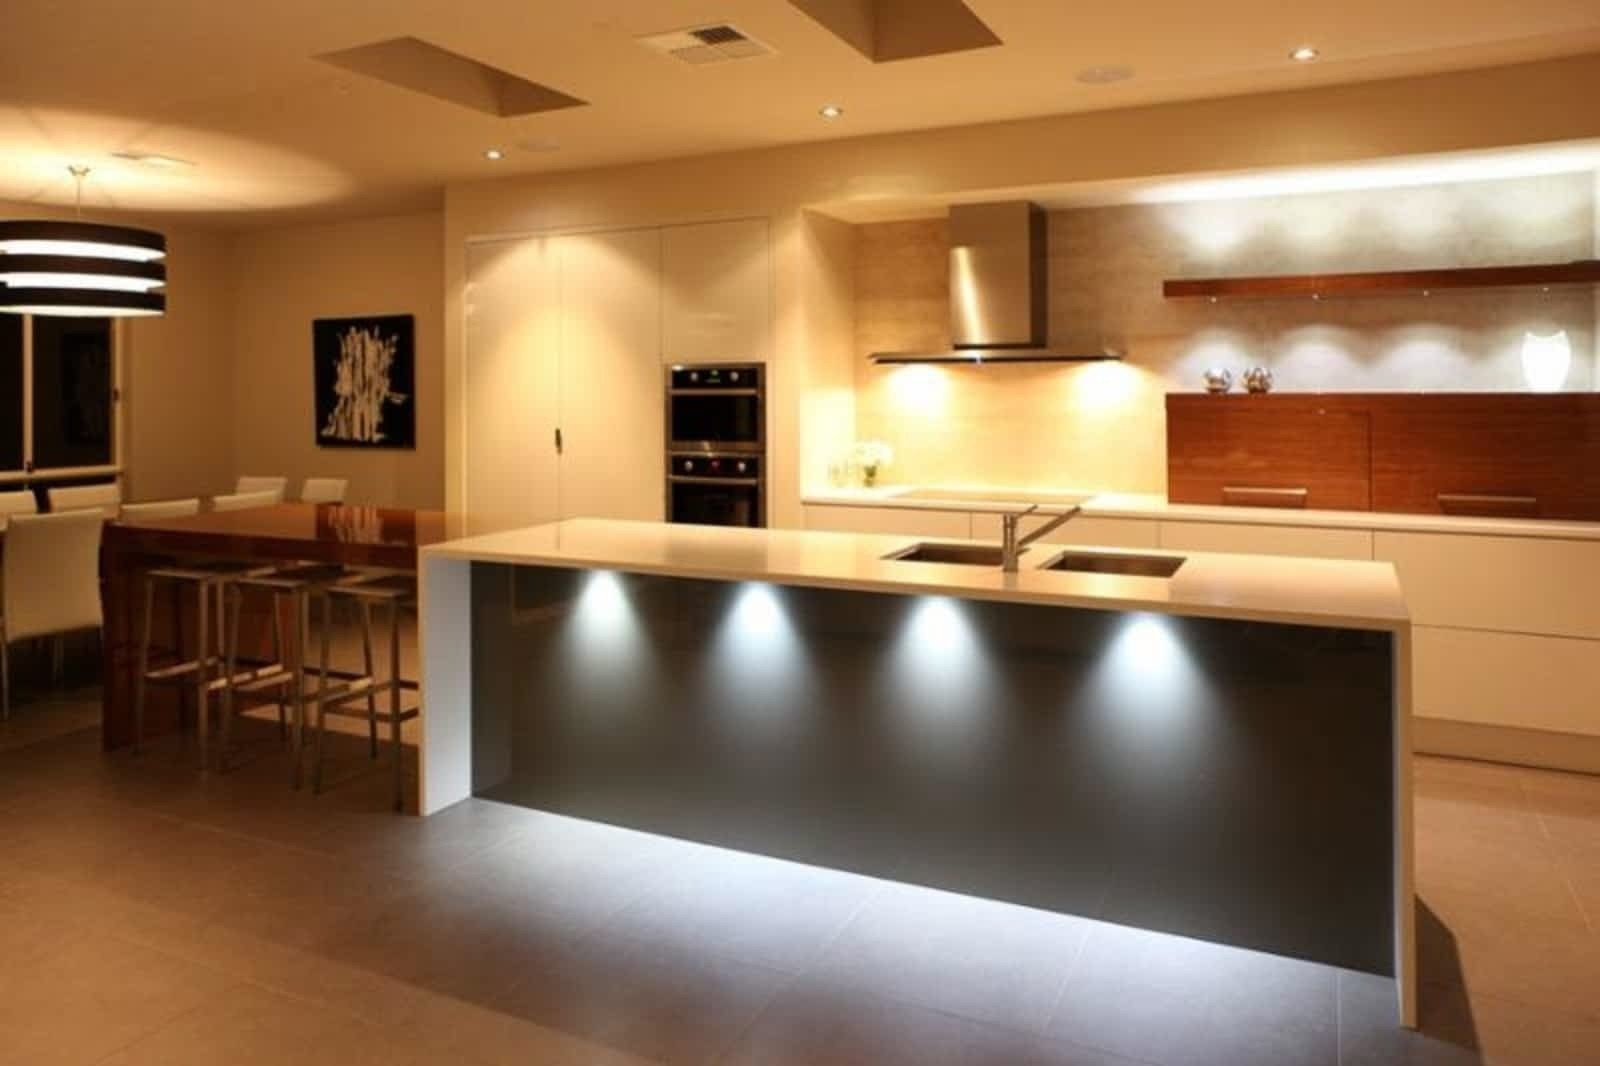 Кухня с подсветкой фото. Освещение на кухне. Декоративная подсветка кухни. Красивая подсветка кухни. Встроенные светильники на кухне.